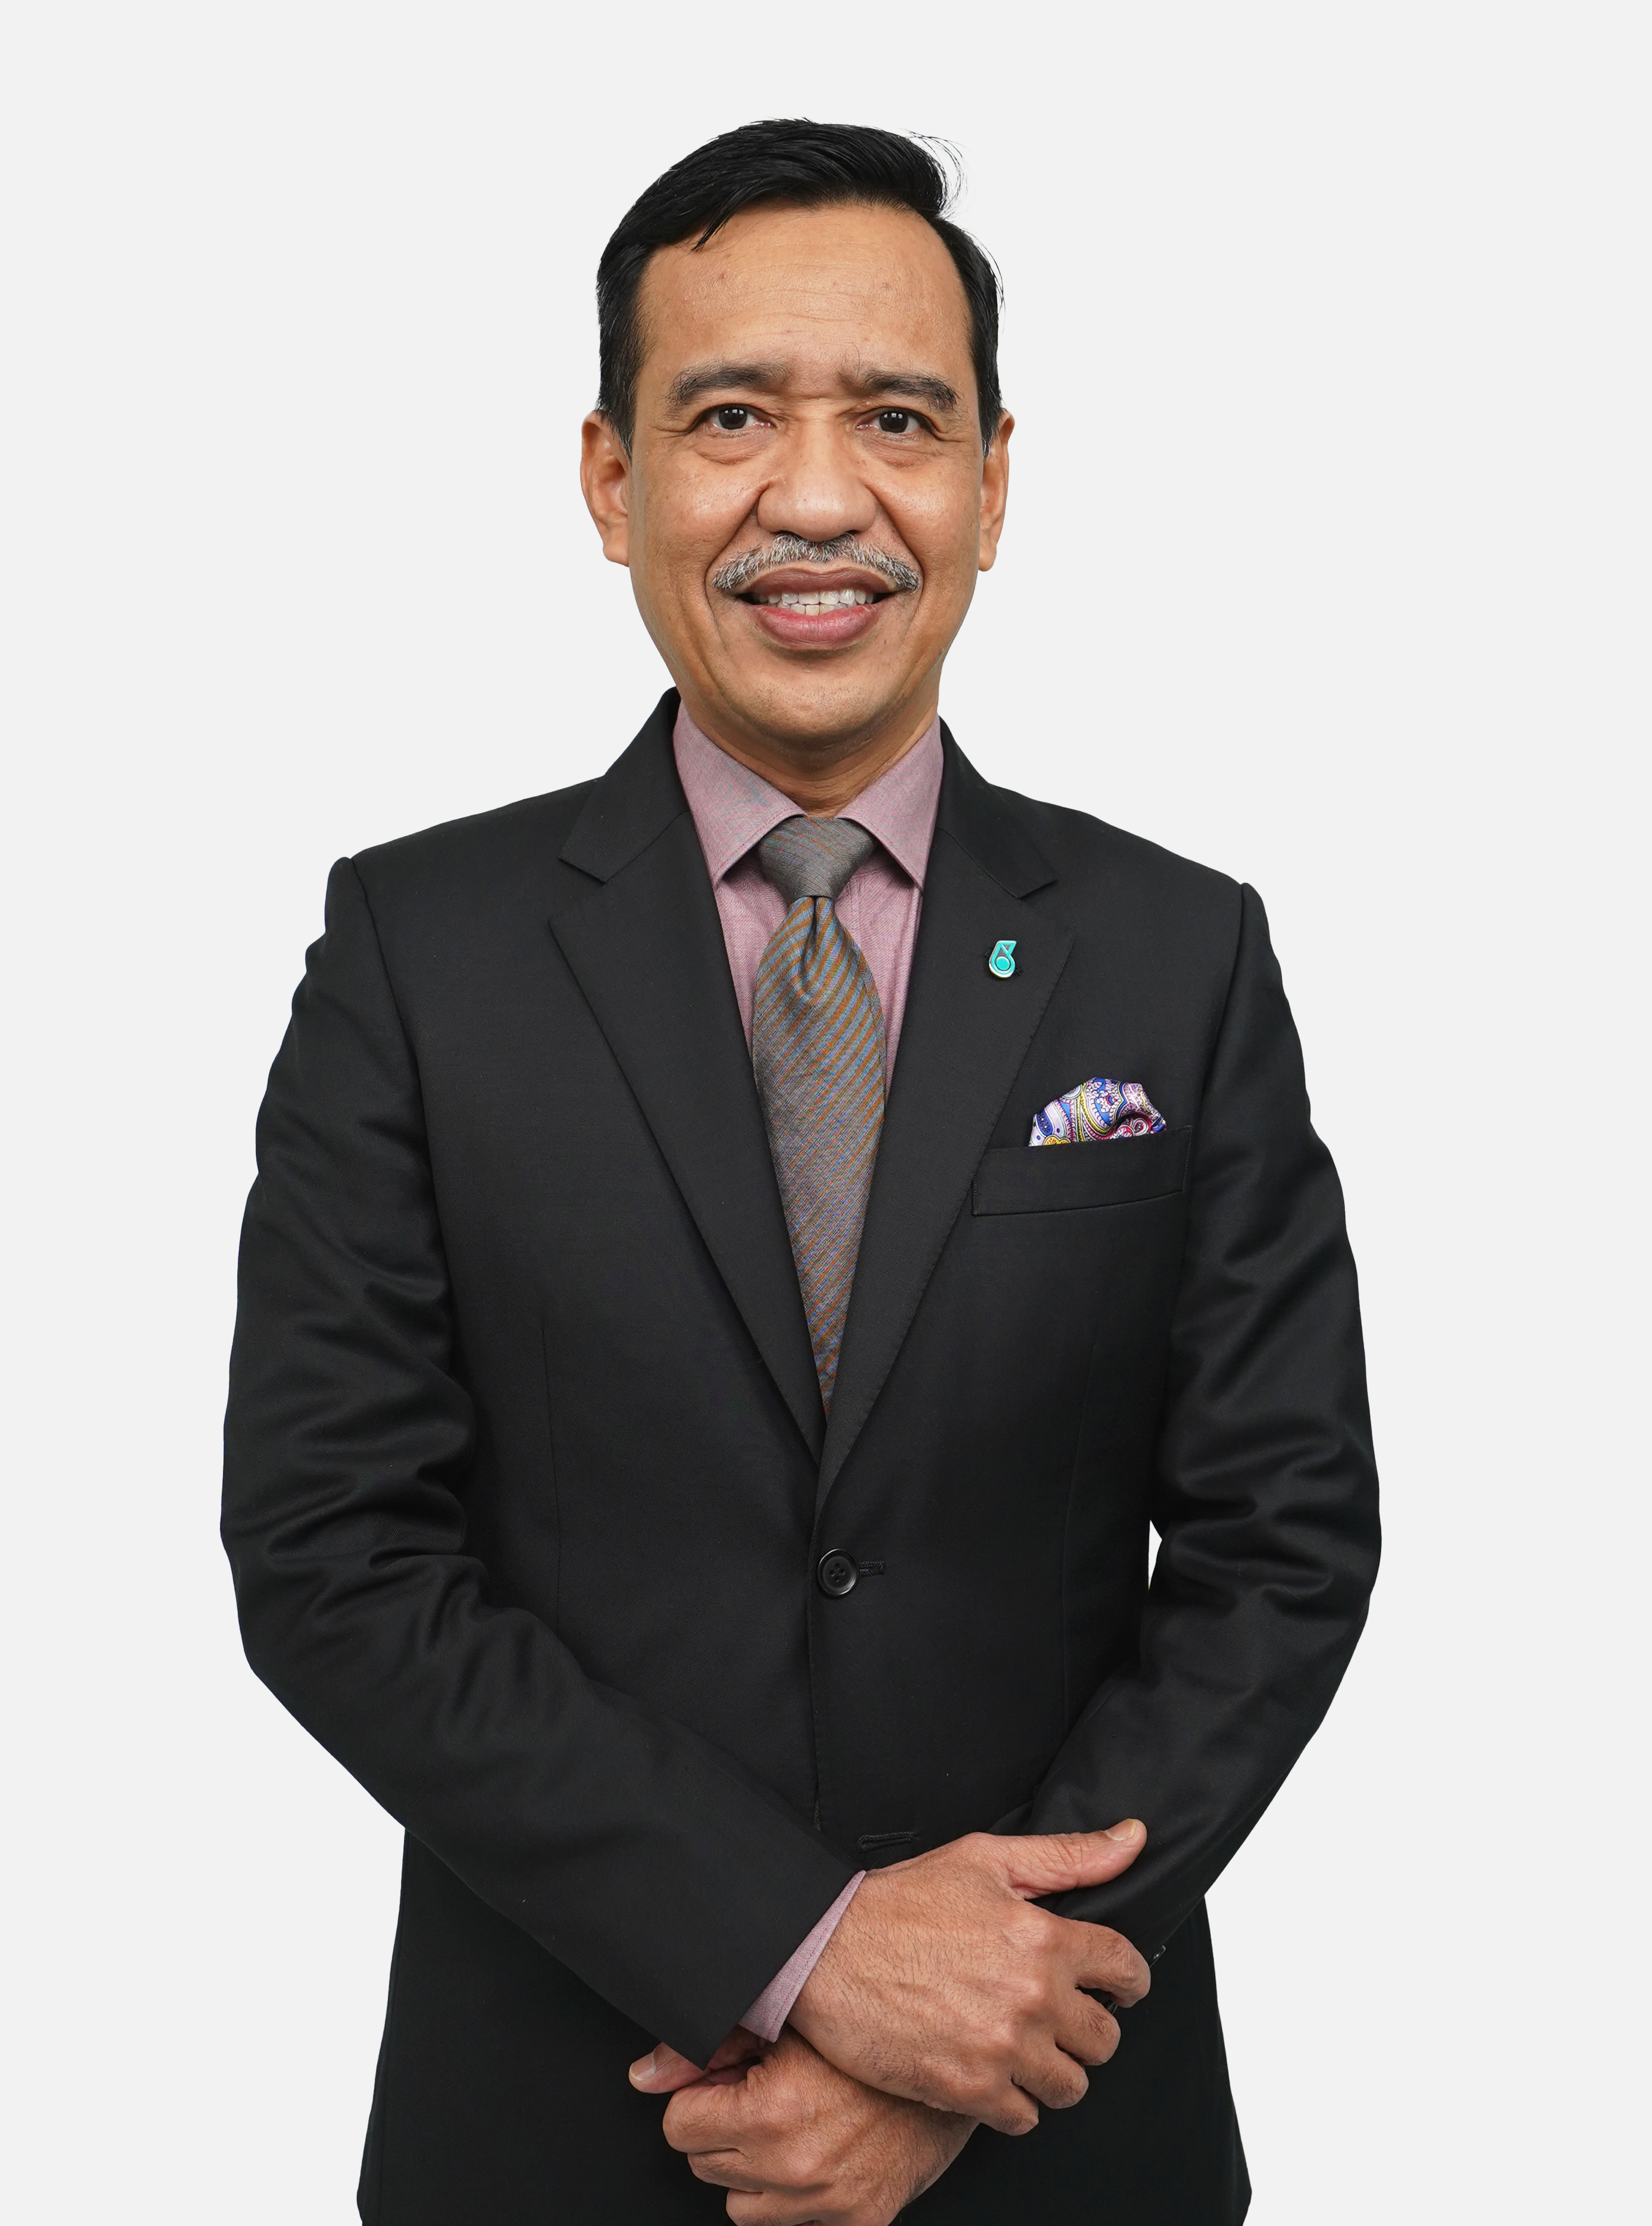 Ir. Mohd Yusri Mohamed Yusof